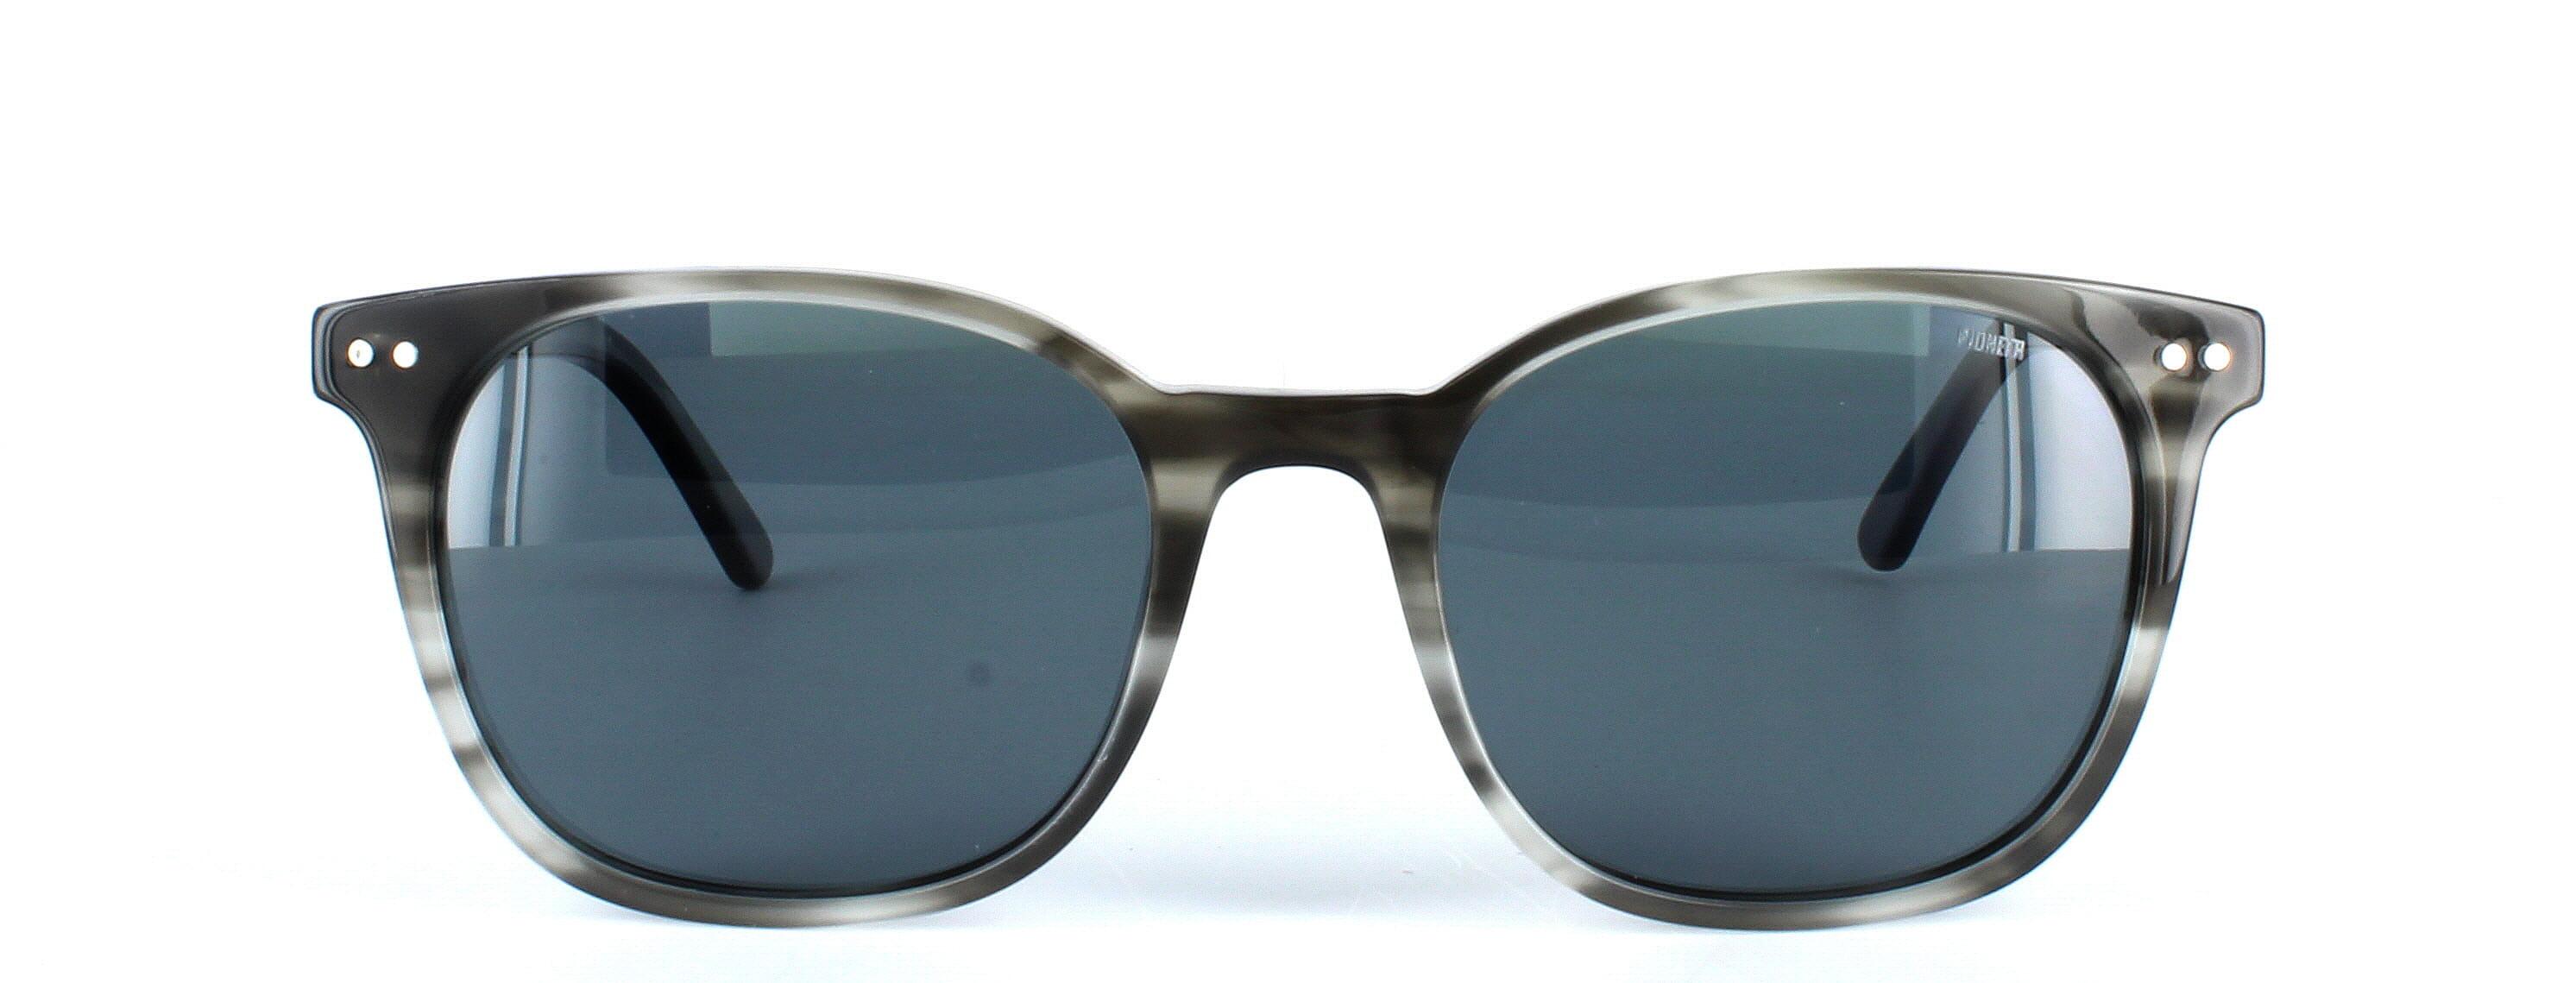 Aurelia - acetate prescription sunglasses for women - round shaped lenses - image view 2